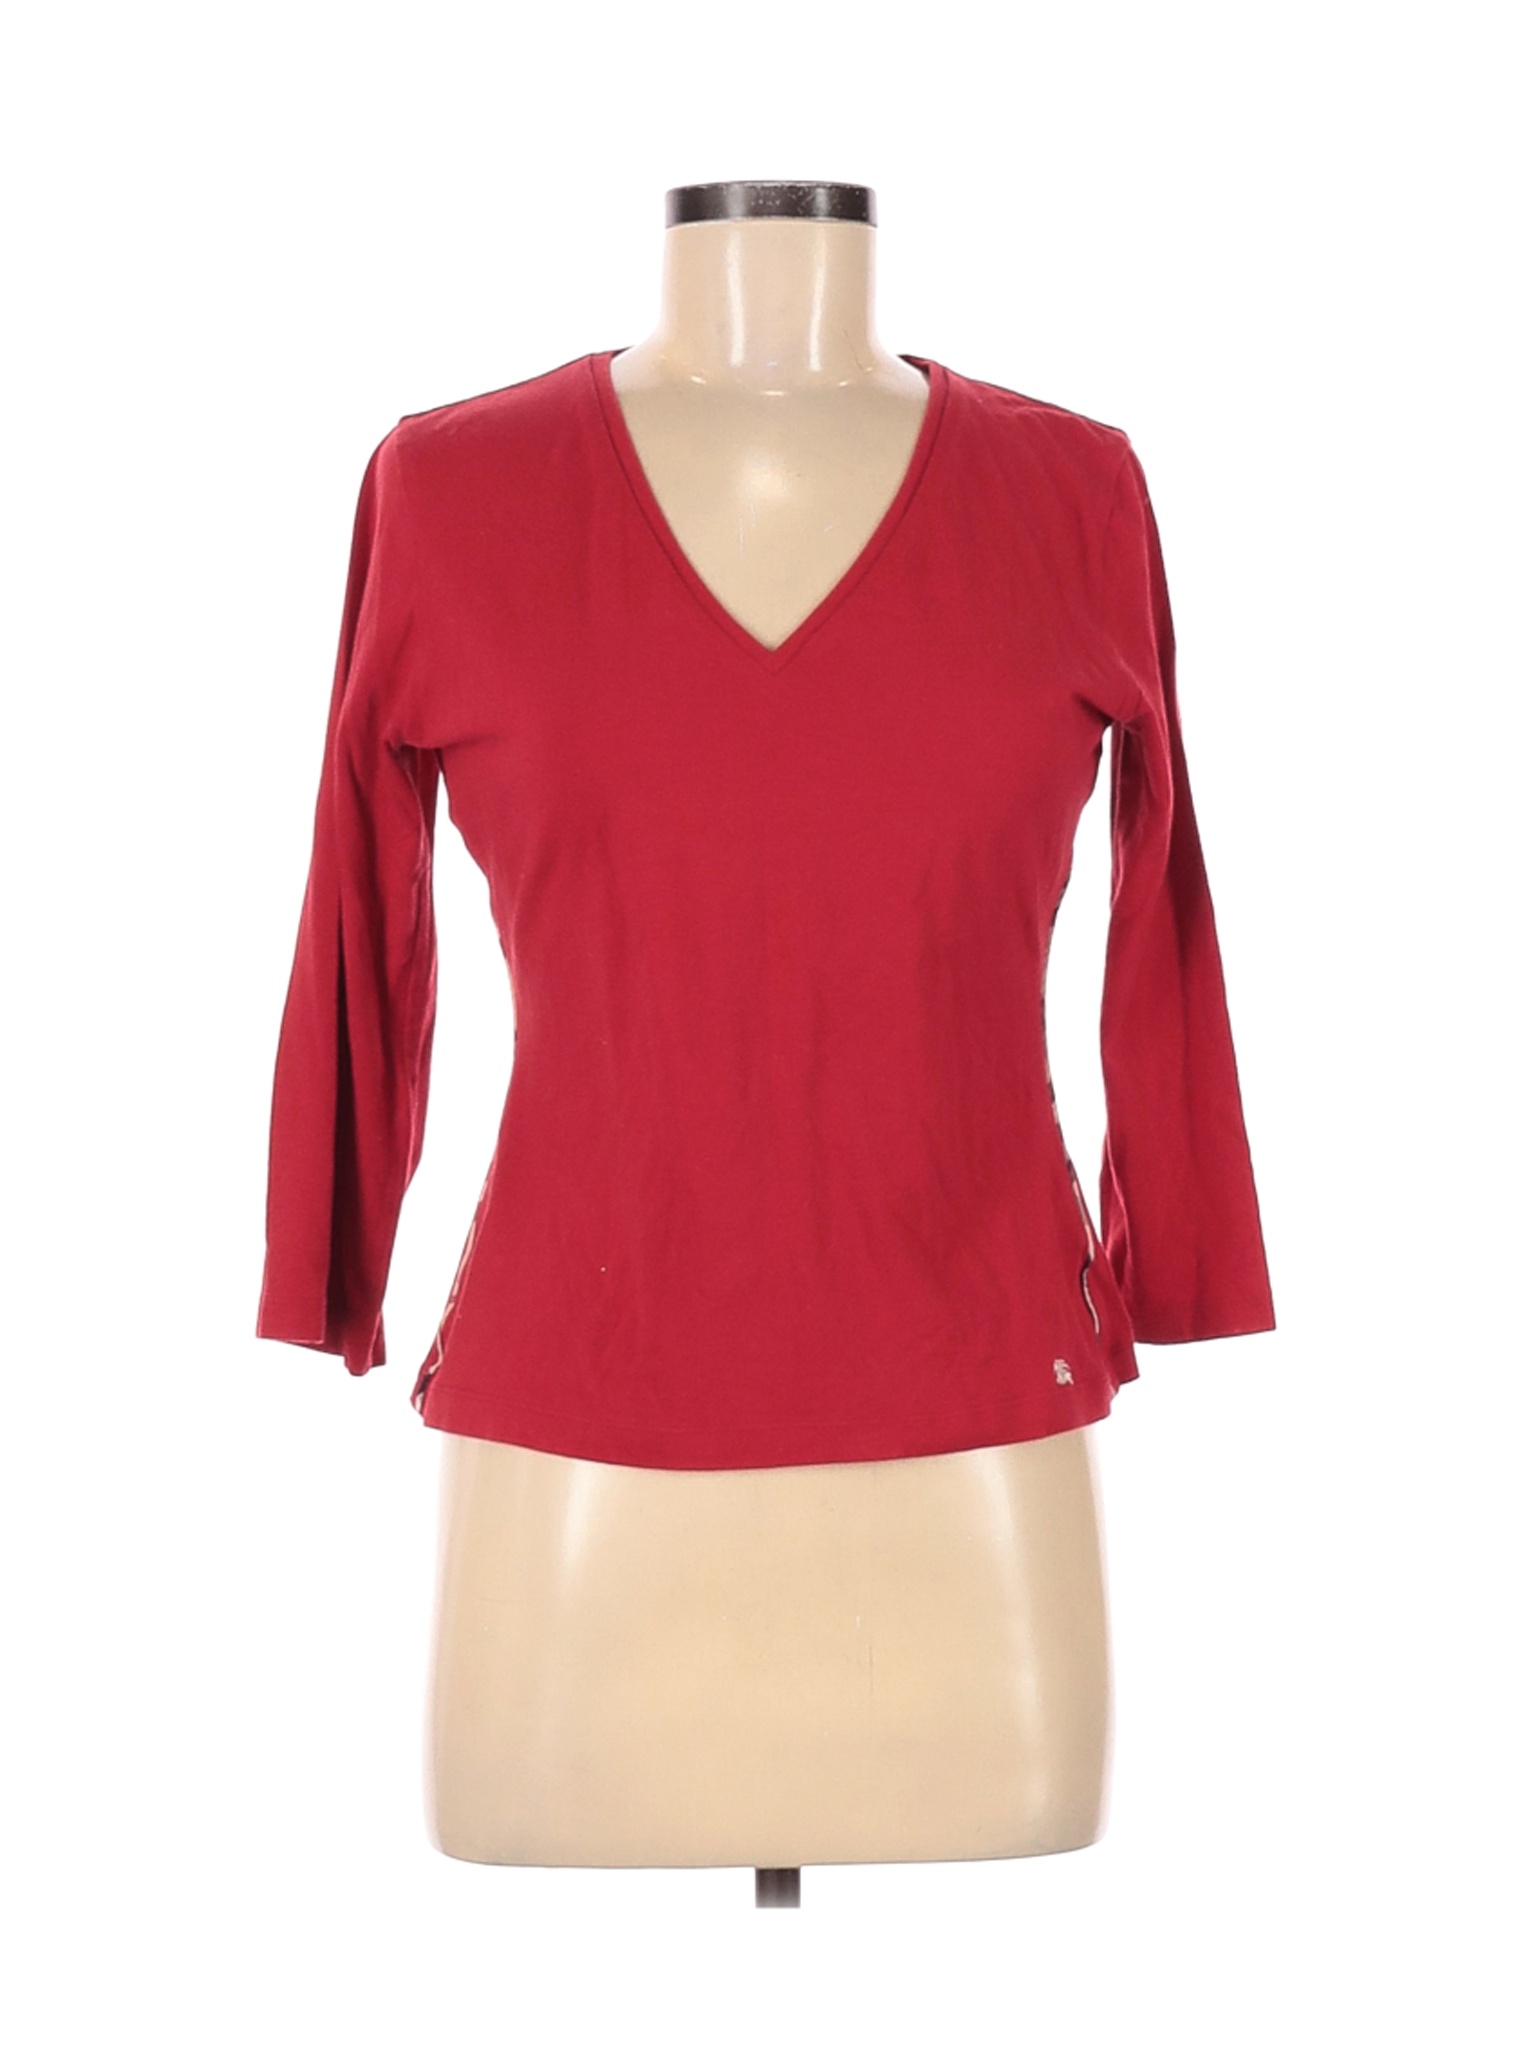 Burberry Women Red 3/4 Sleeve T-Shirt M | eBay